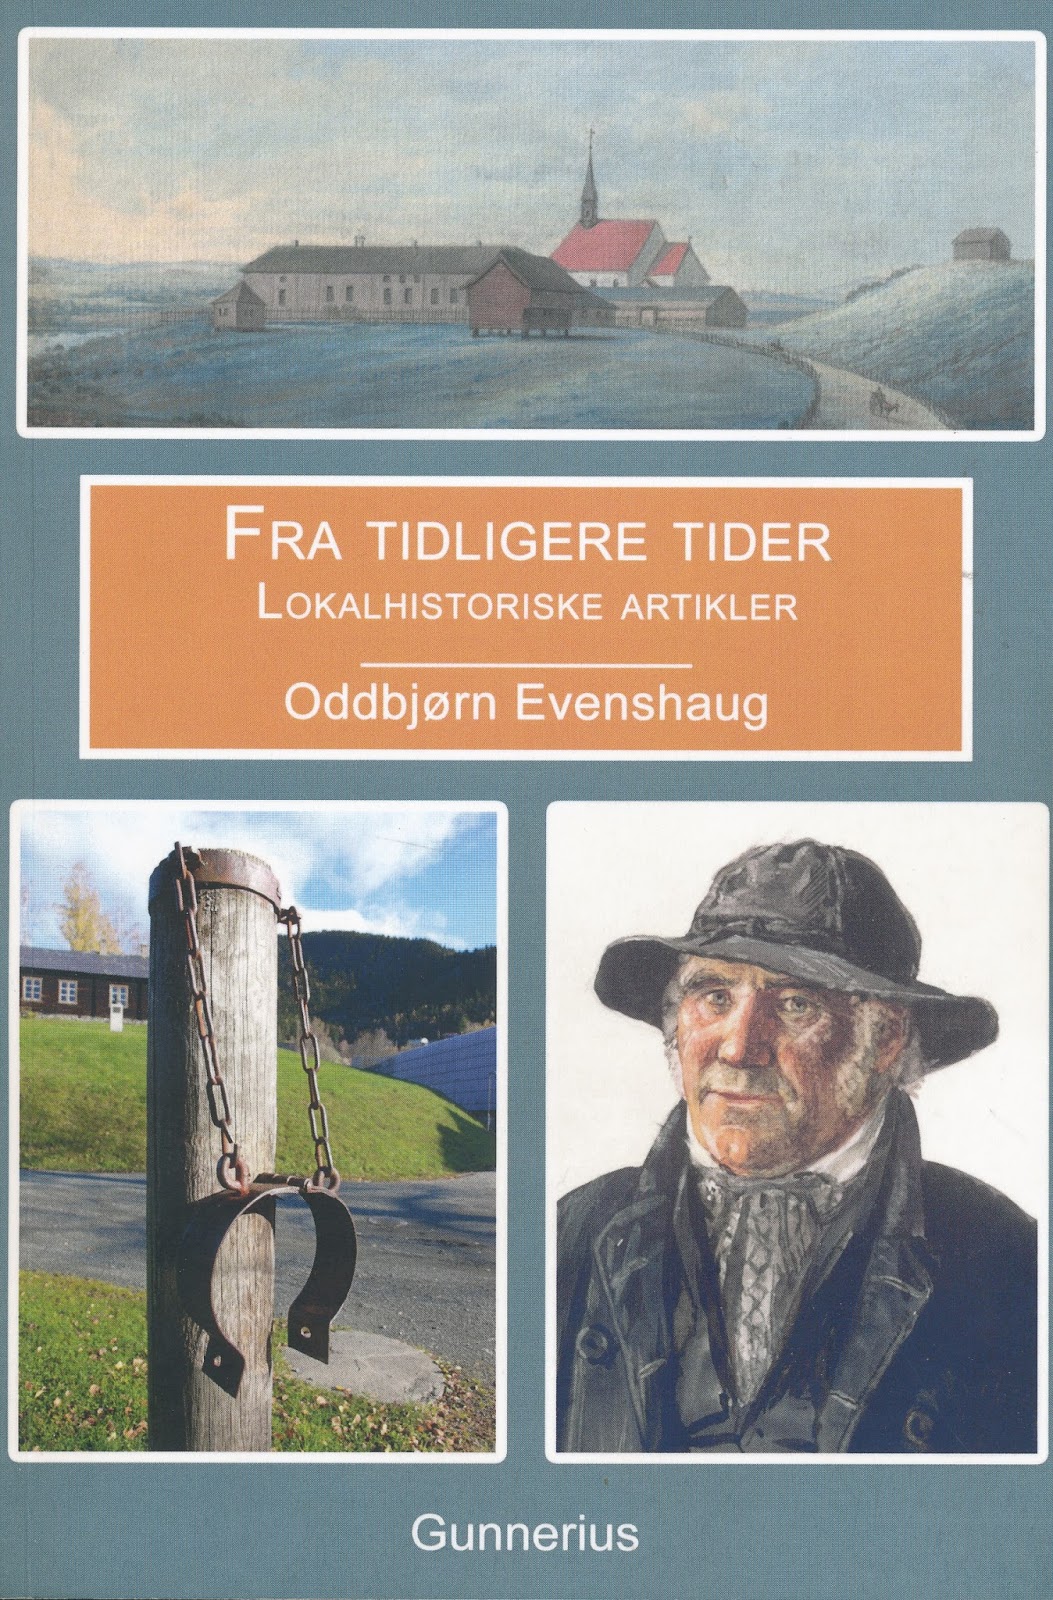 "FRA TIDLIGERE TIDER". Lokalhistoriske artikler